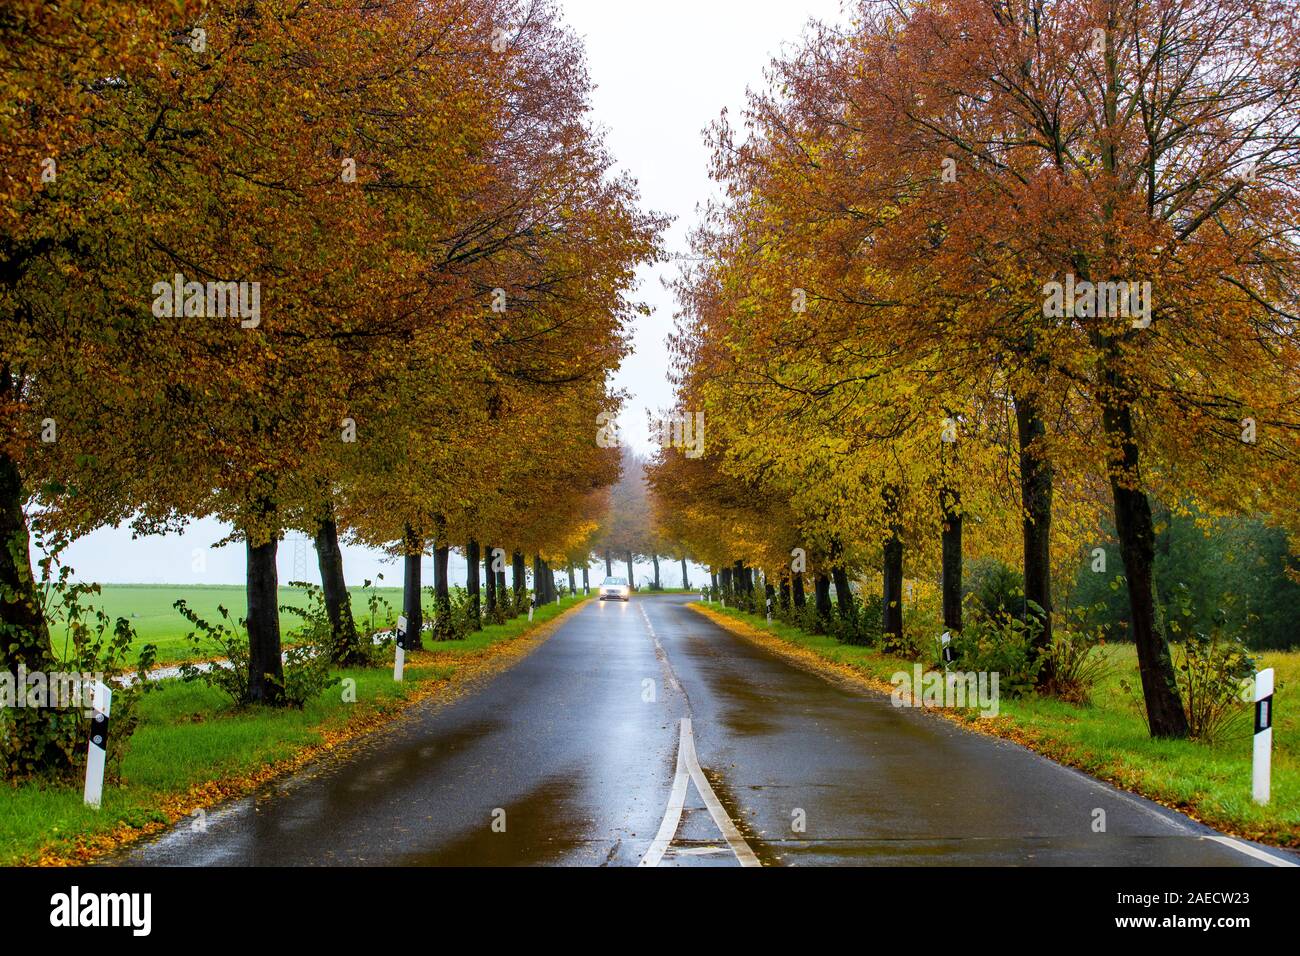 Landstrasse, Herbst, Nebel, Regenwetter, Baumallee, nasse Fahrbahn, Blätter, Stock Photo